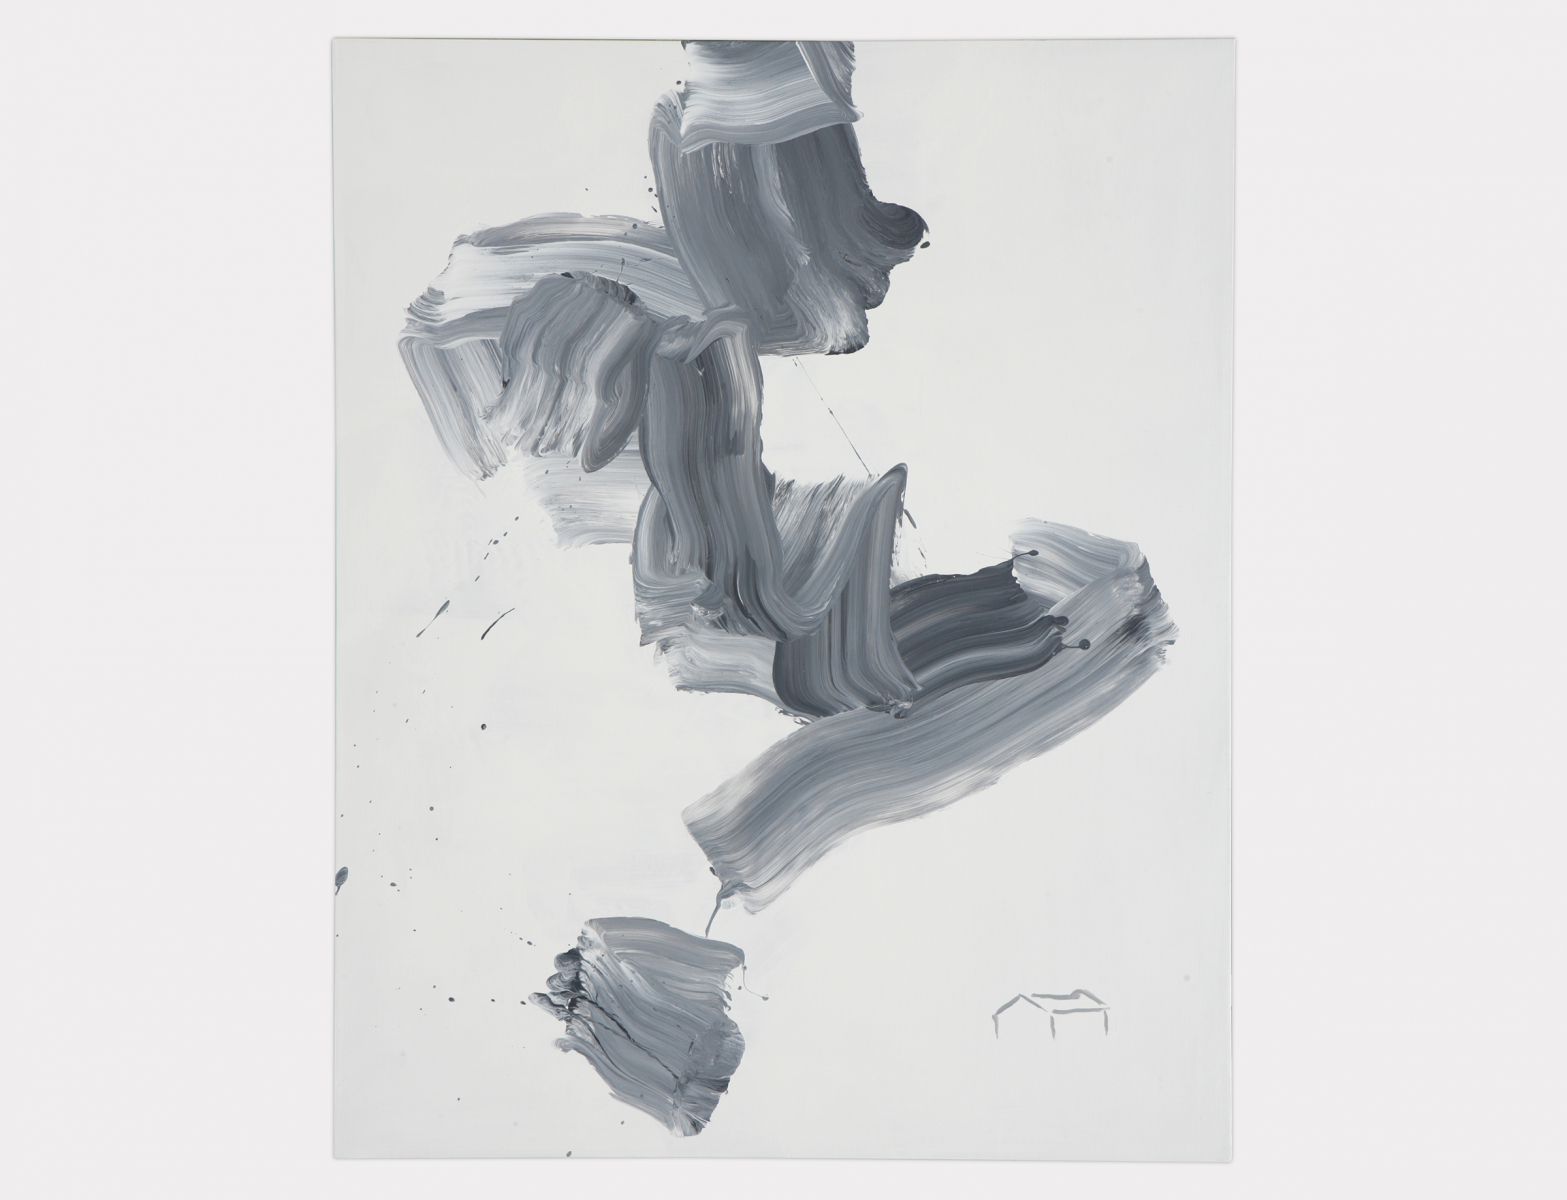 Emptiness-14027, 2014, Acrylic on Canvas, 162x130.3cm
